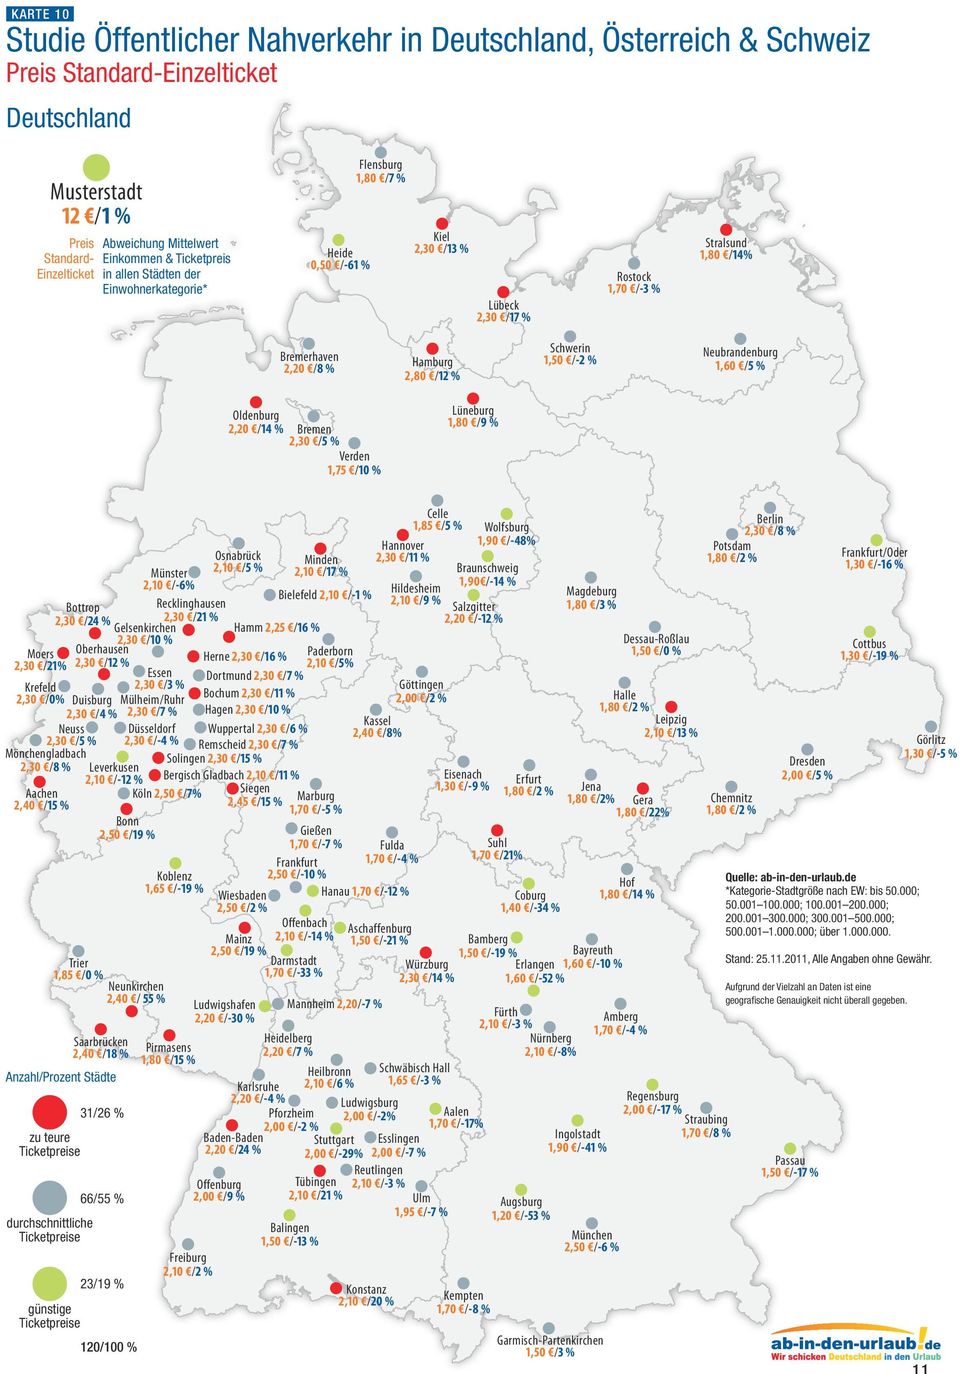 Lüneburg 1,80 /9 % Trier 1,85 /0 % Neunkirchen,0 / 55 % Saarbrücken,0 /18 % Koblenz 1,65 /-19 % Freiburg,10 / % Osnabrück,10 /5 % Münster,10 /-6% Bielefeld,10 /-1 % Bottrop Recklinghausen,0 / %,0 /1